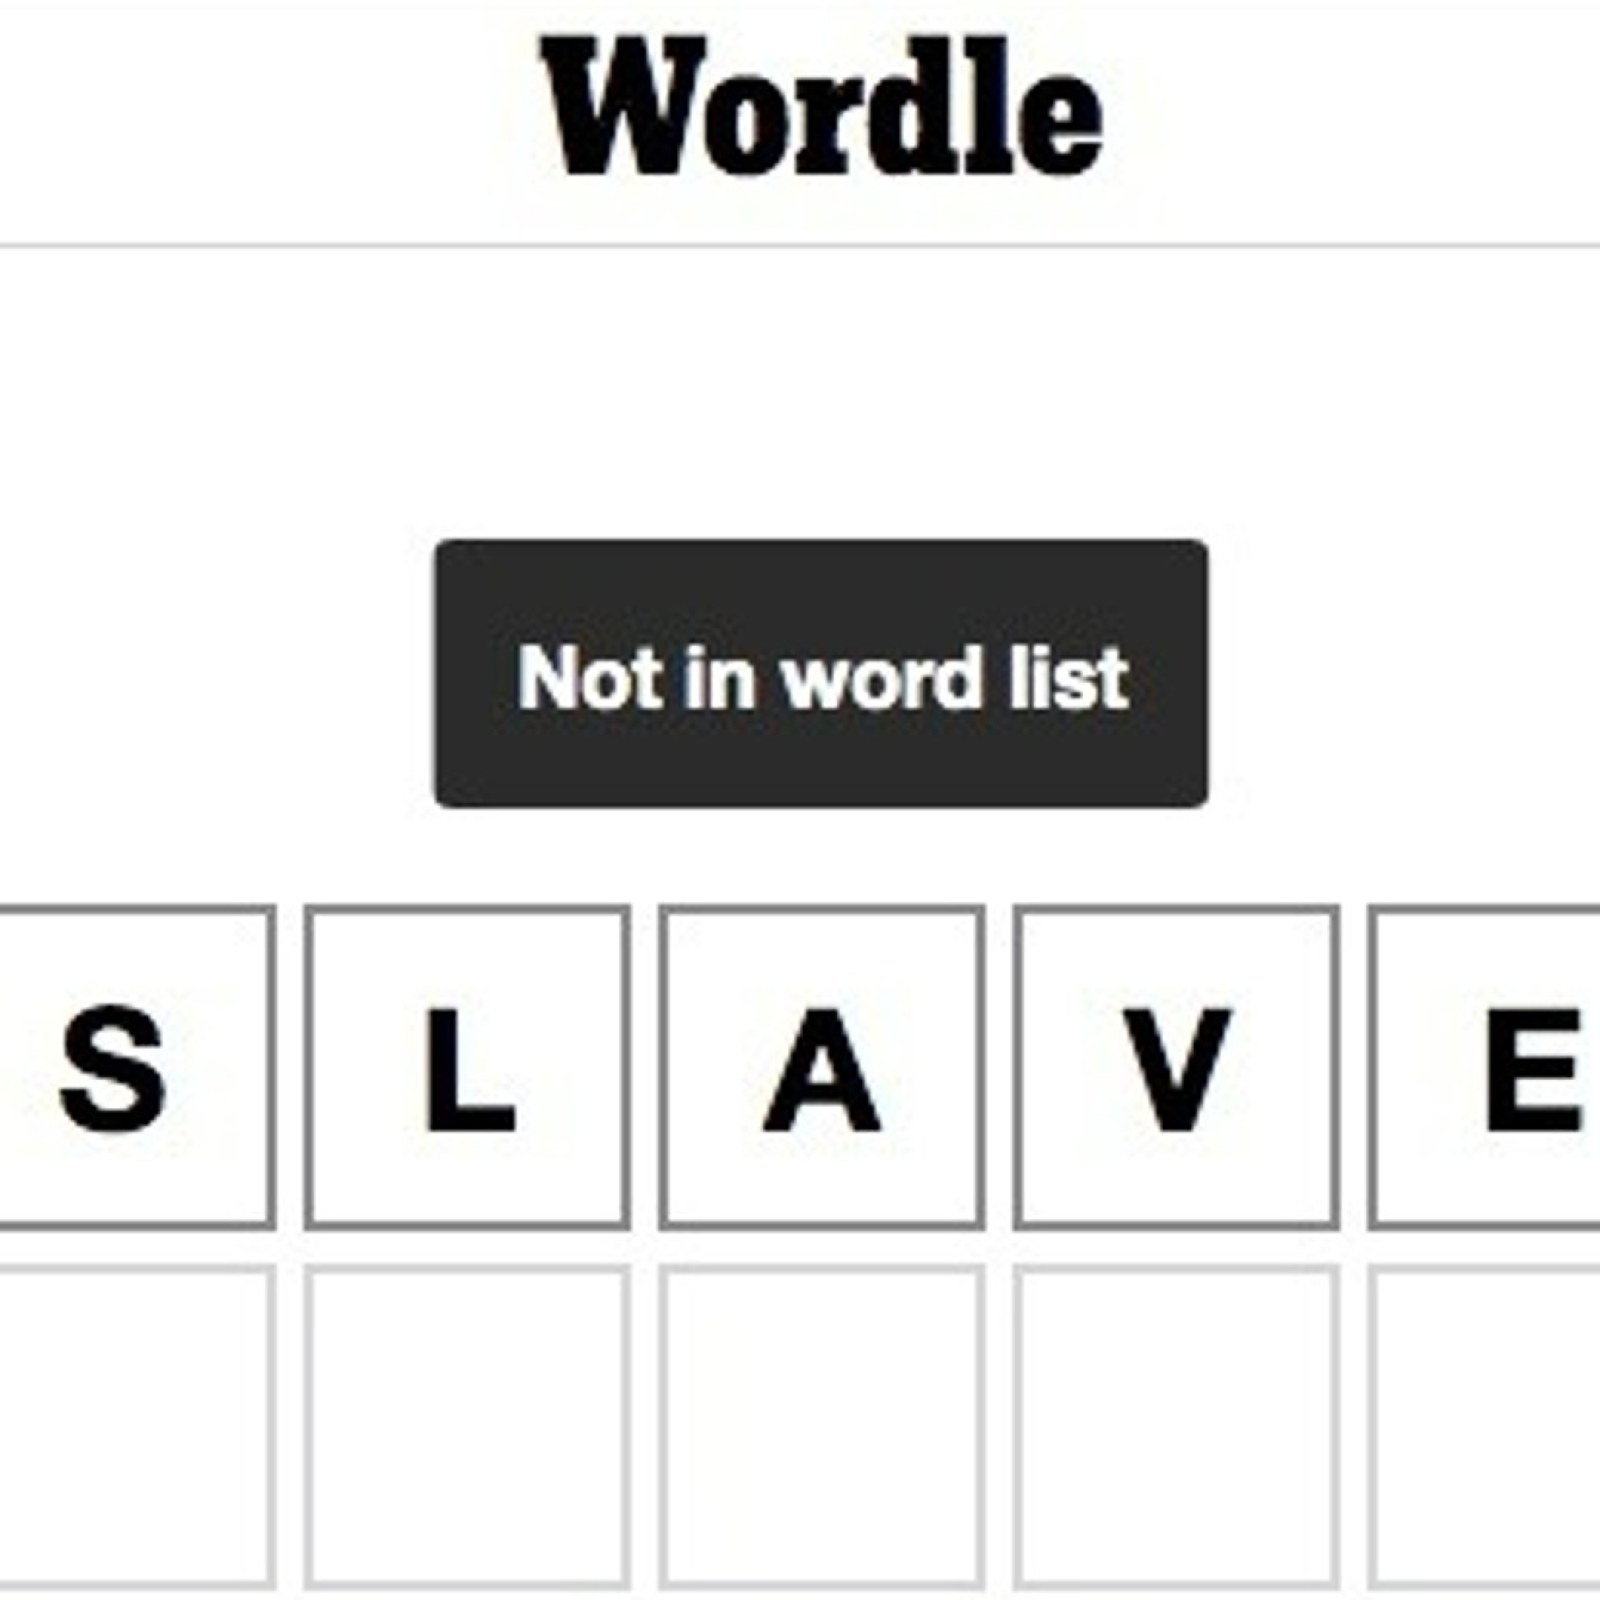 Пароль игра ответы. Wordle New York times. Offensive Word. Deleting Words. Hurtful Words Shiho.